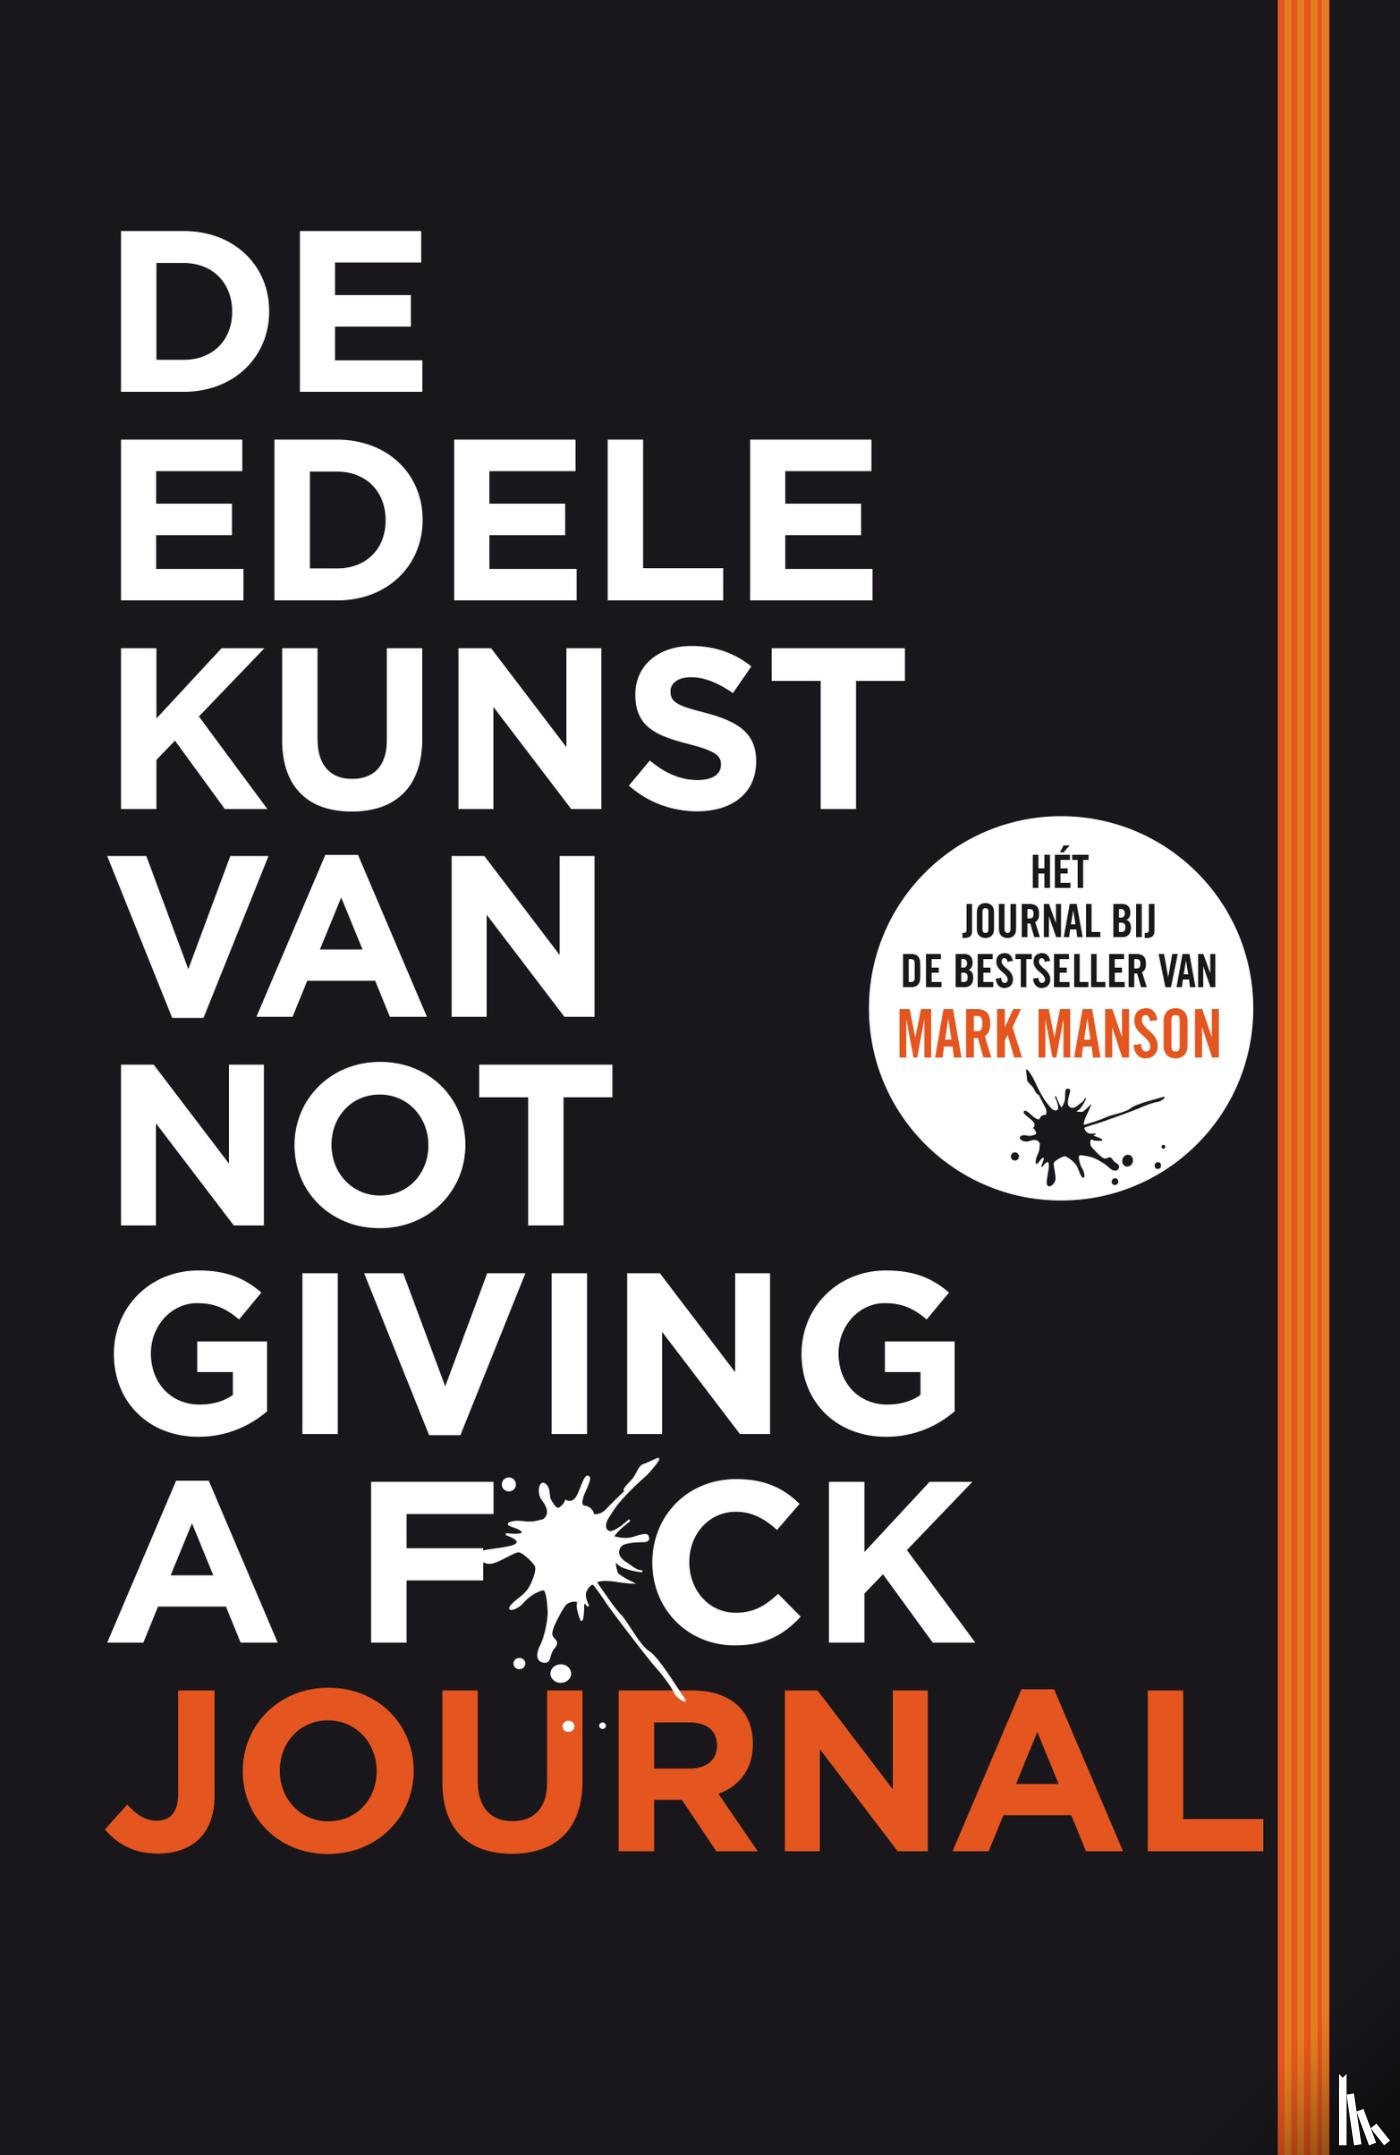 Manson, Mark - De edele kunst van not giving a f*ck journal